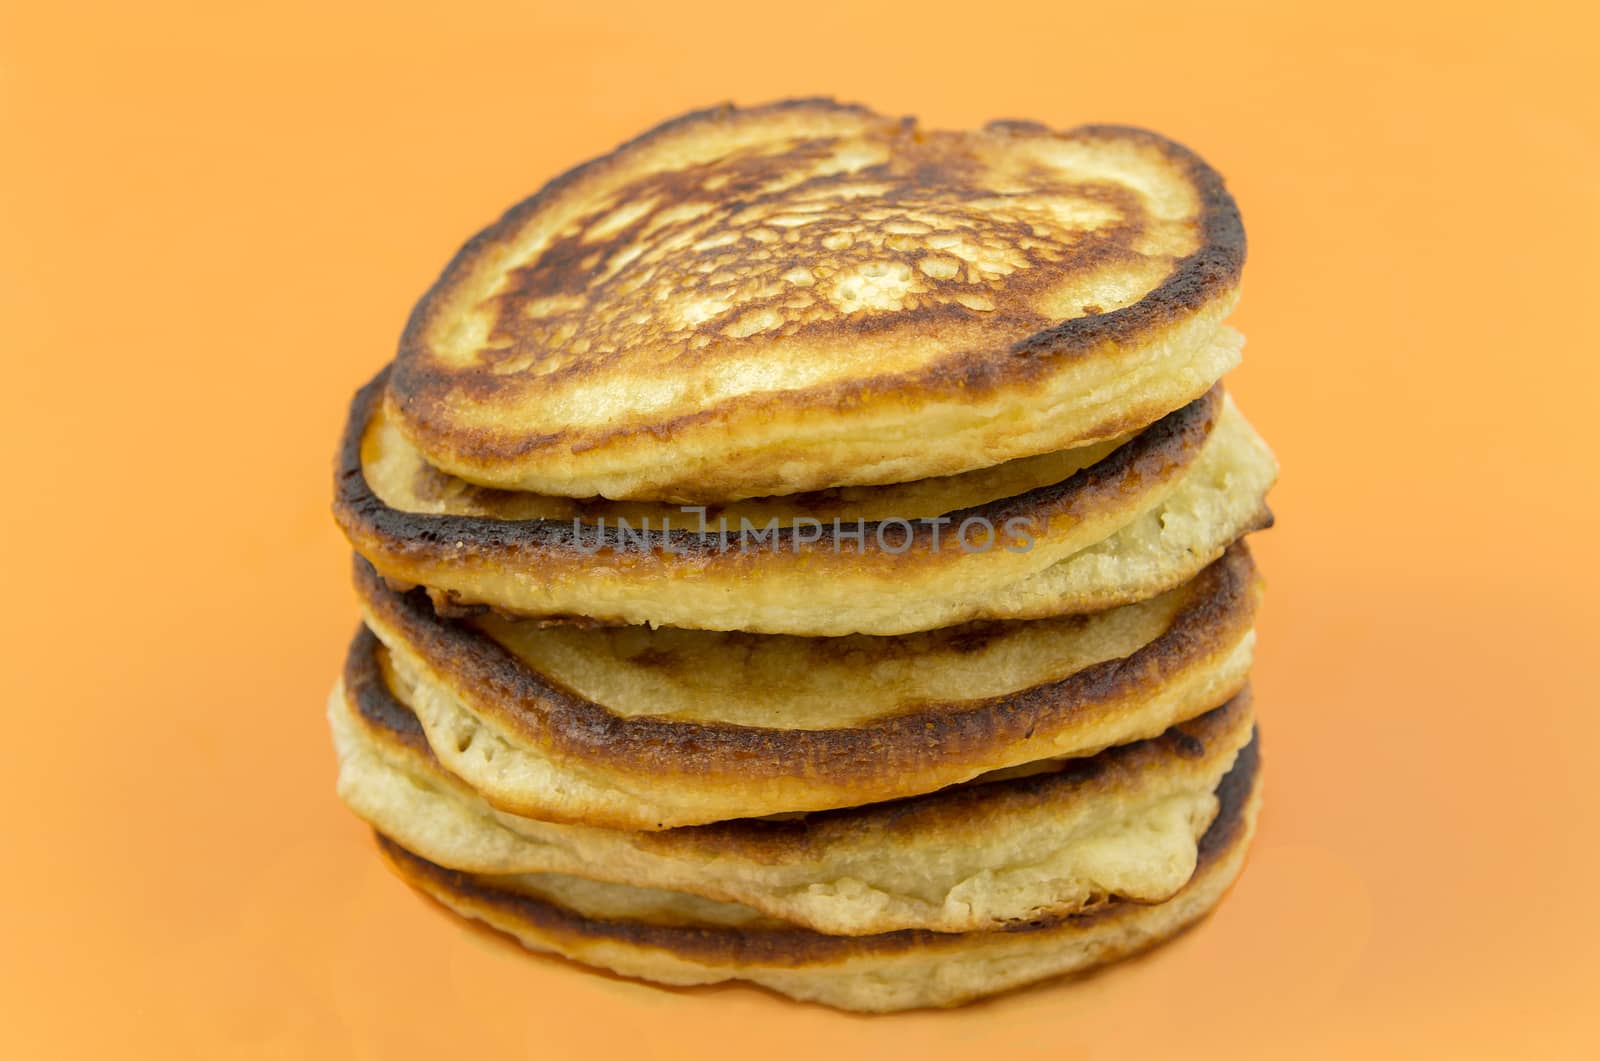 A pile of fresh, thick pancakes by sergeizubkov64